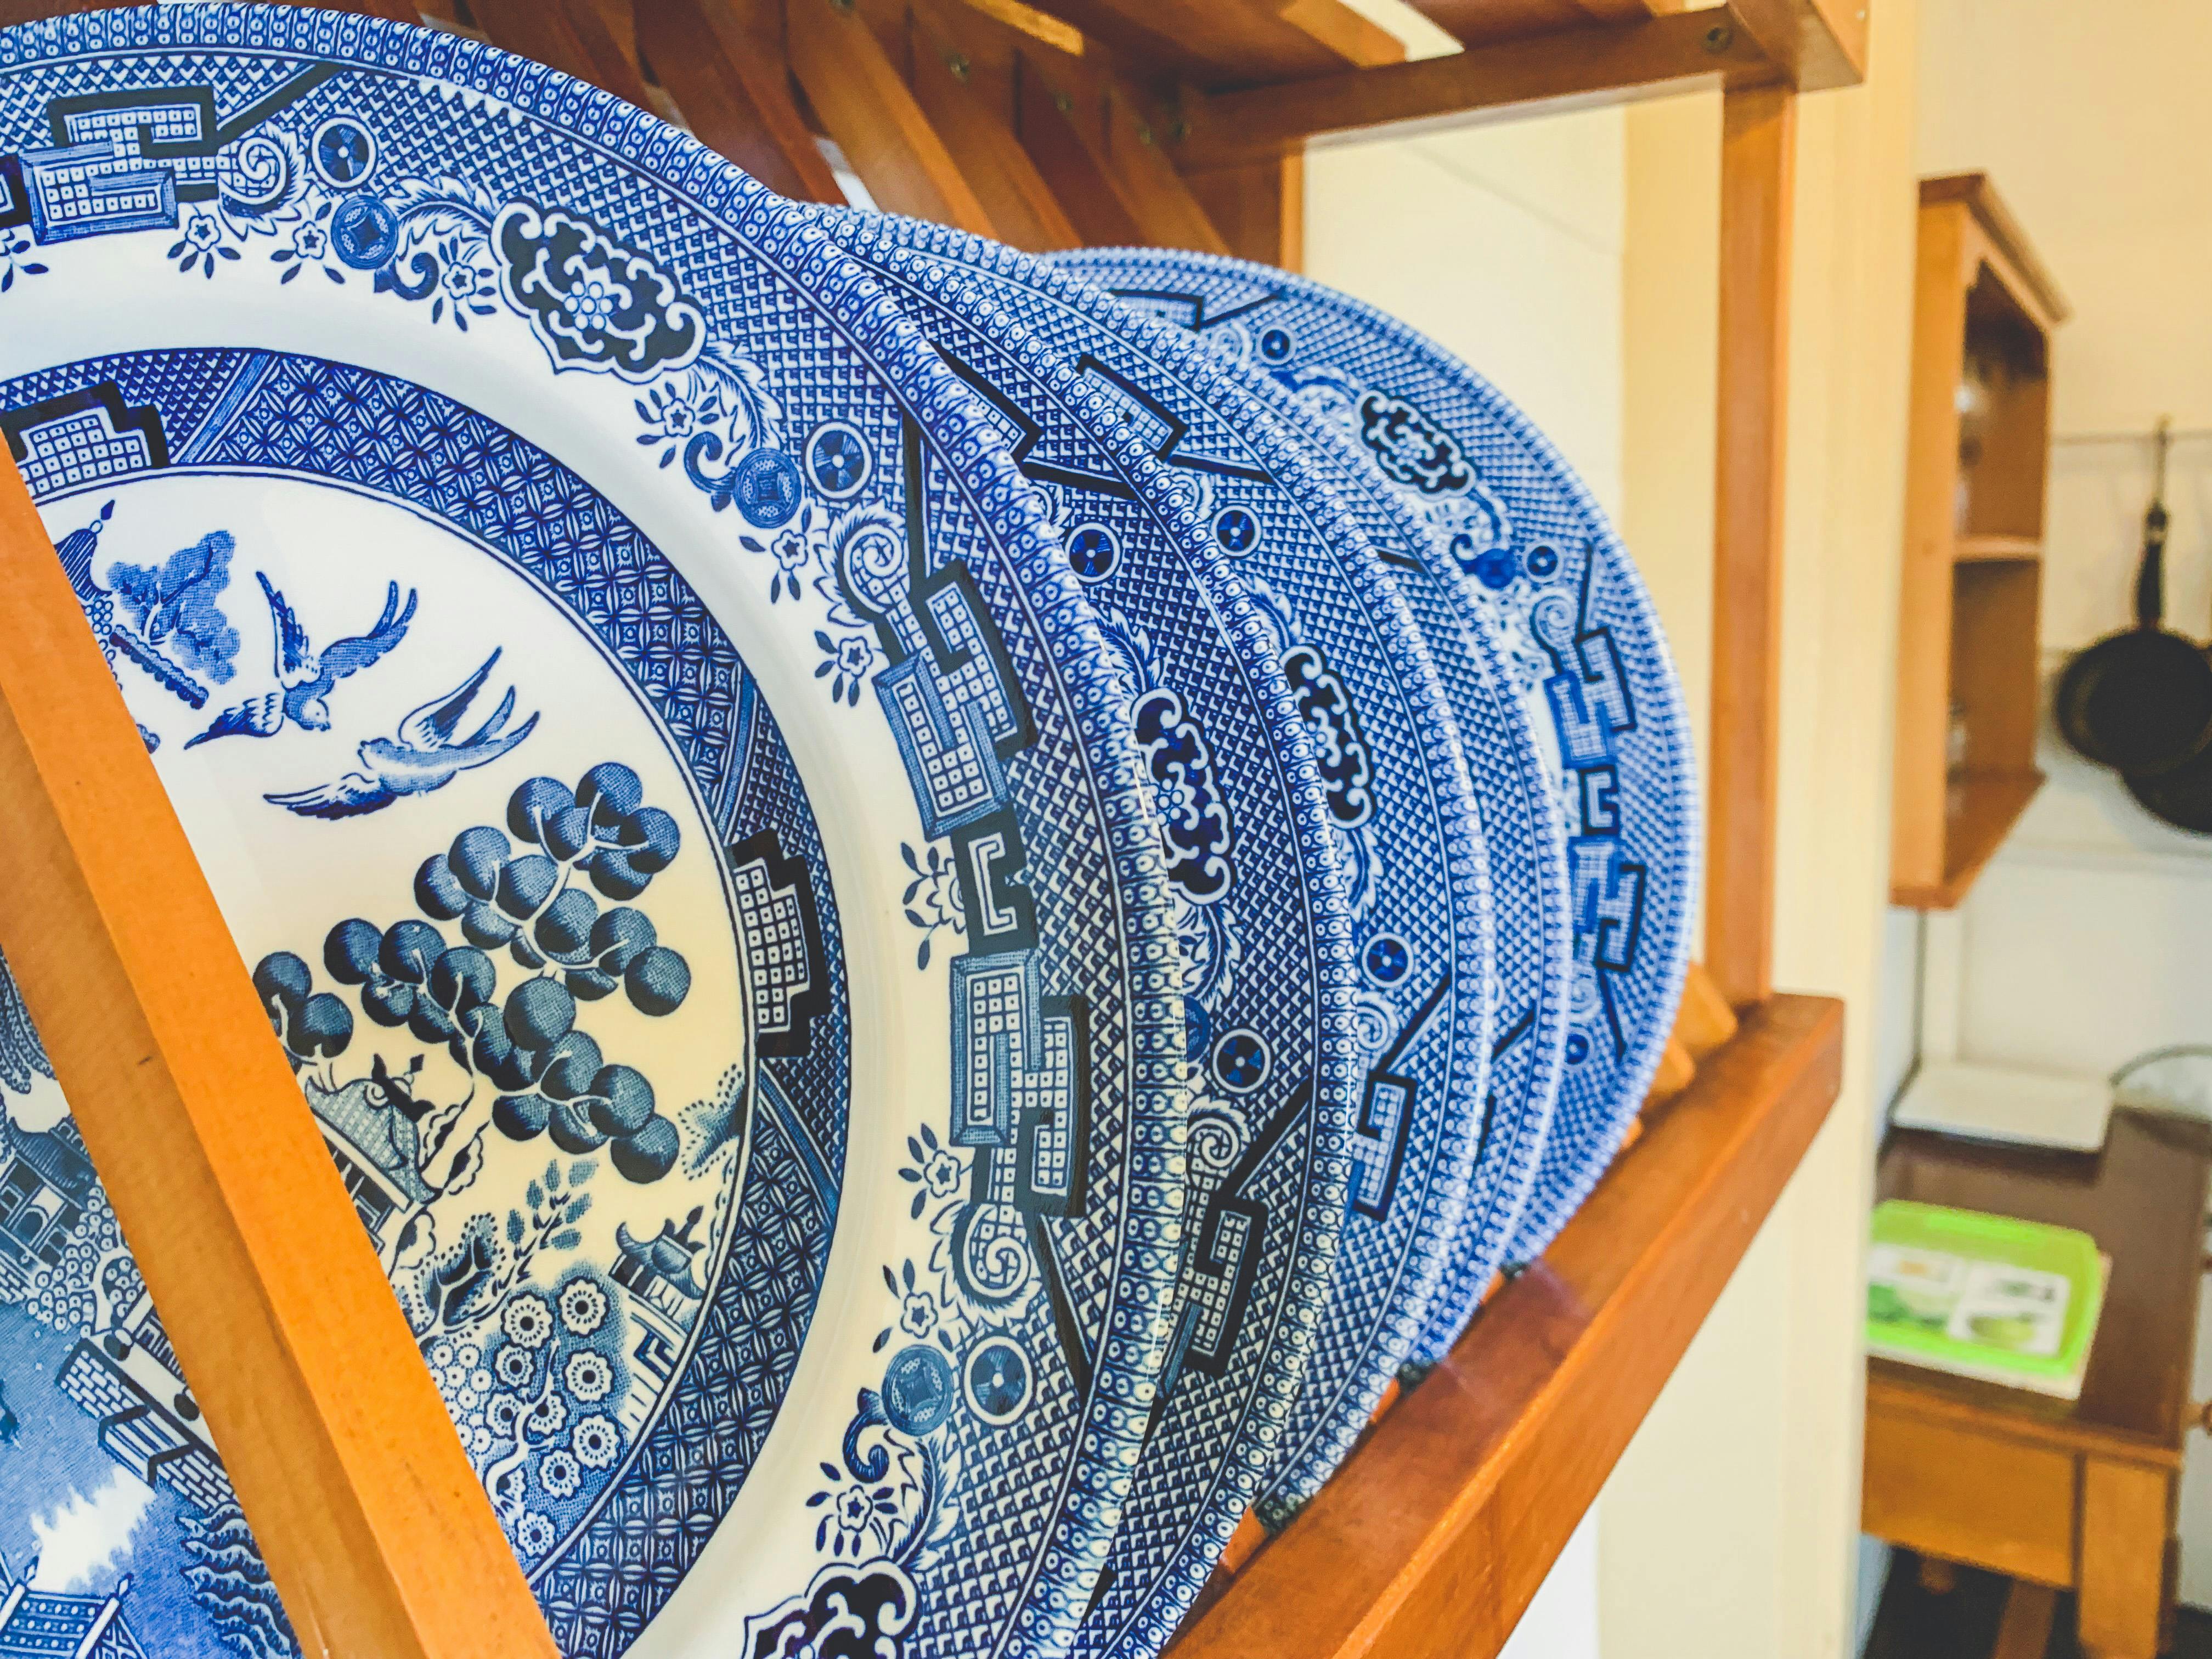 Blue willow china in Pipiriki and Jerusalem suite kitchen - Tongariro Crossing Lodge